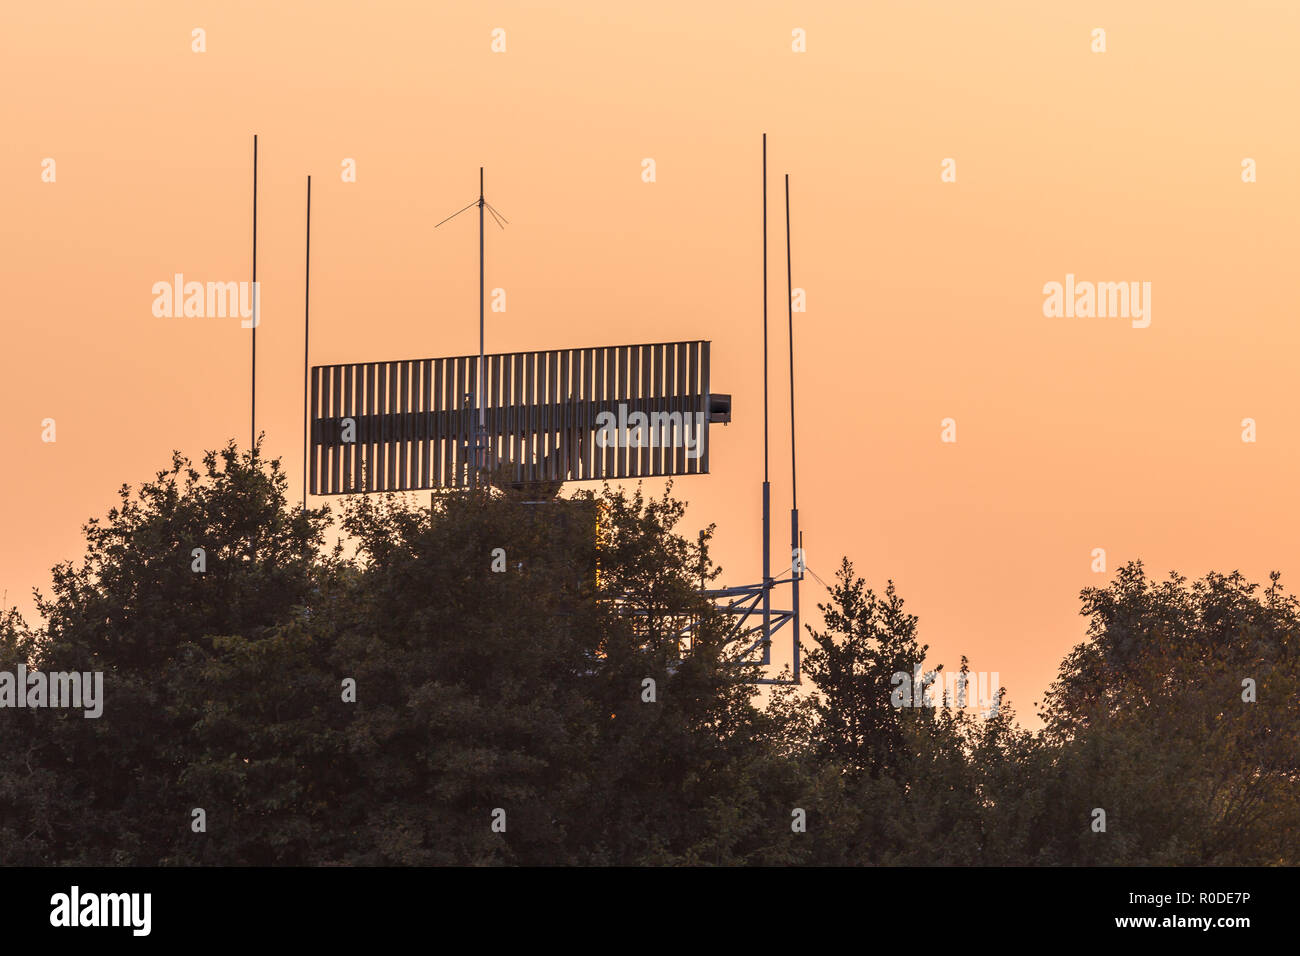 Radar antenna communication technology network hidden in bush during sunset. Stock Photo